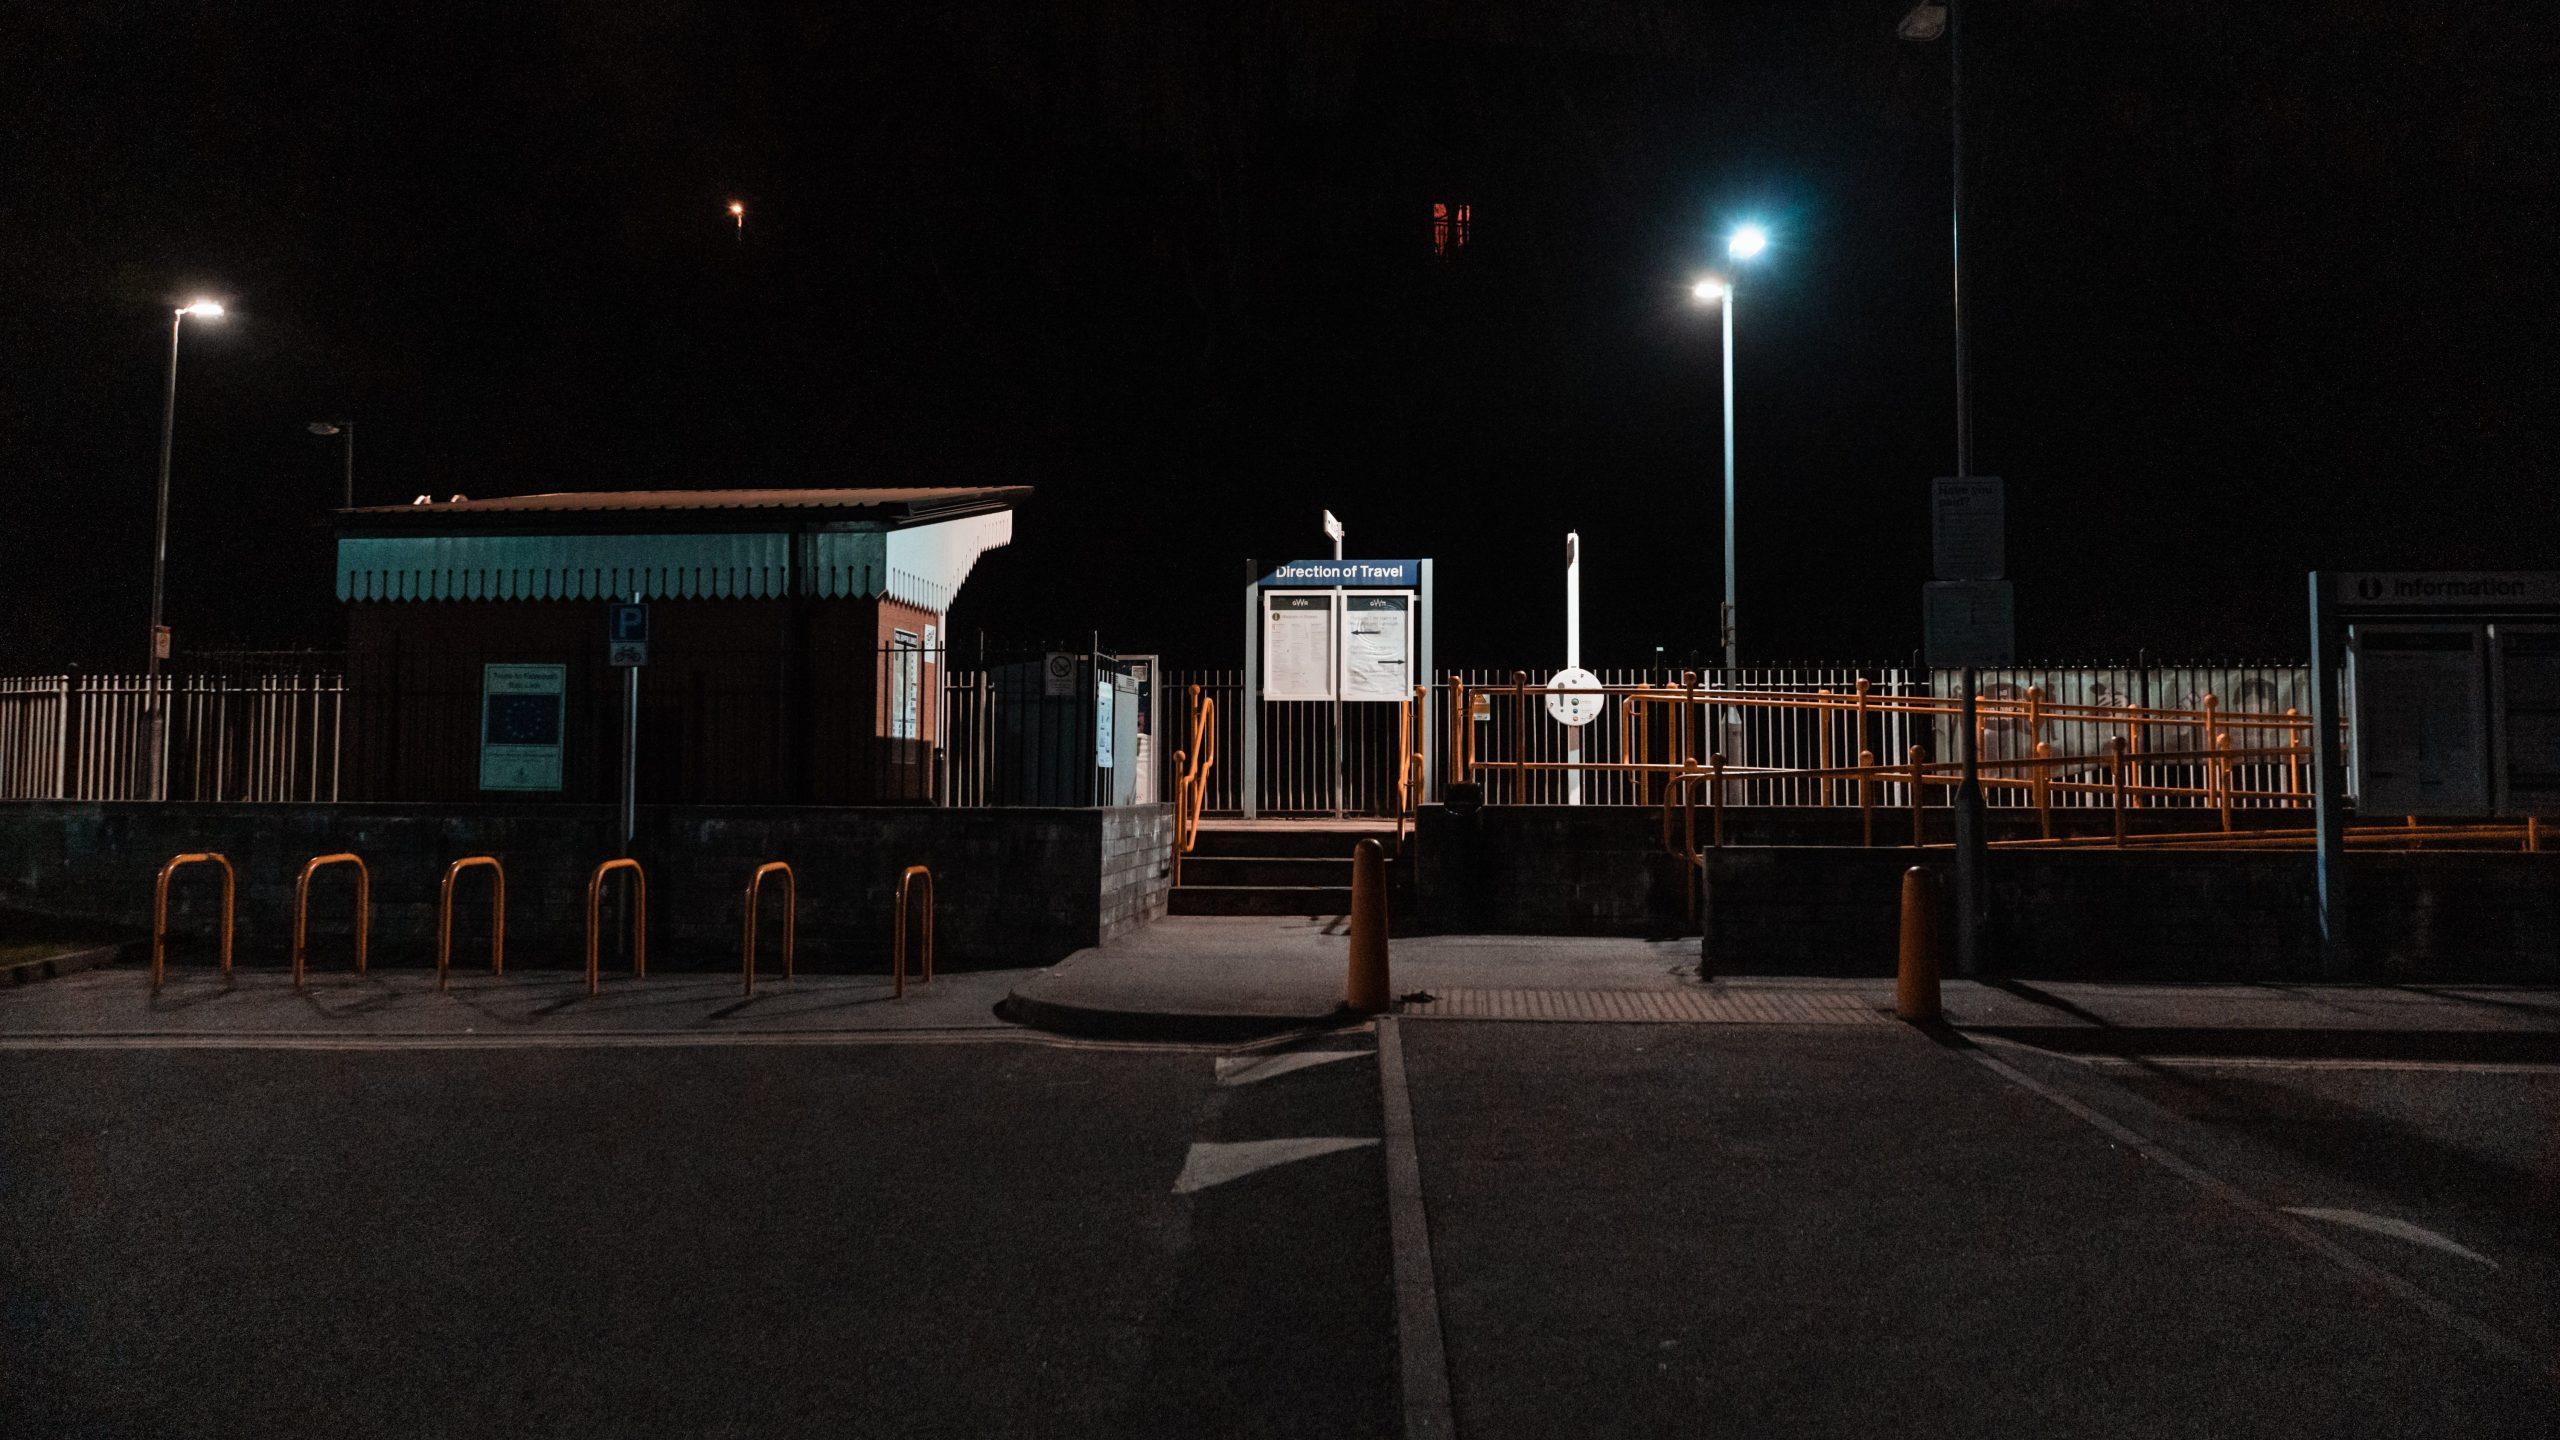 penryn train station at night